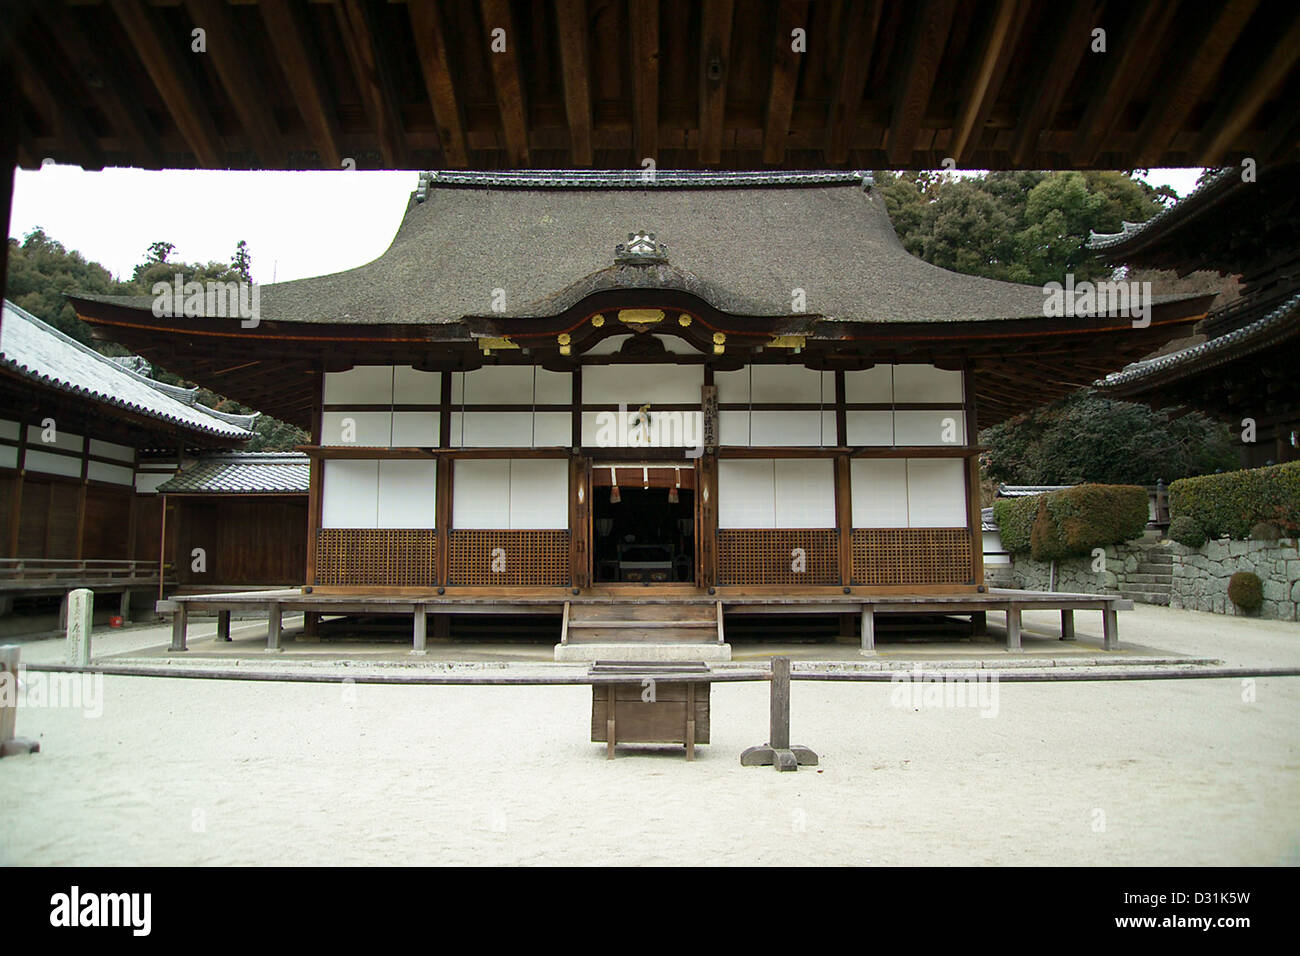 Kanchō-dō 潅頂堂 in the Tō-in 唐院 at Mii-dera, a Buddhist temple in Otsu, Shiga Prefecture, Japan Stock Photo